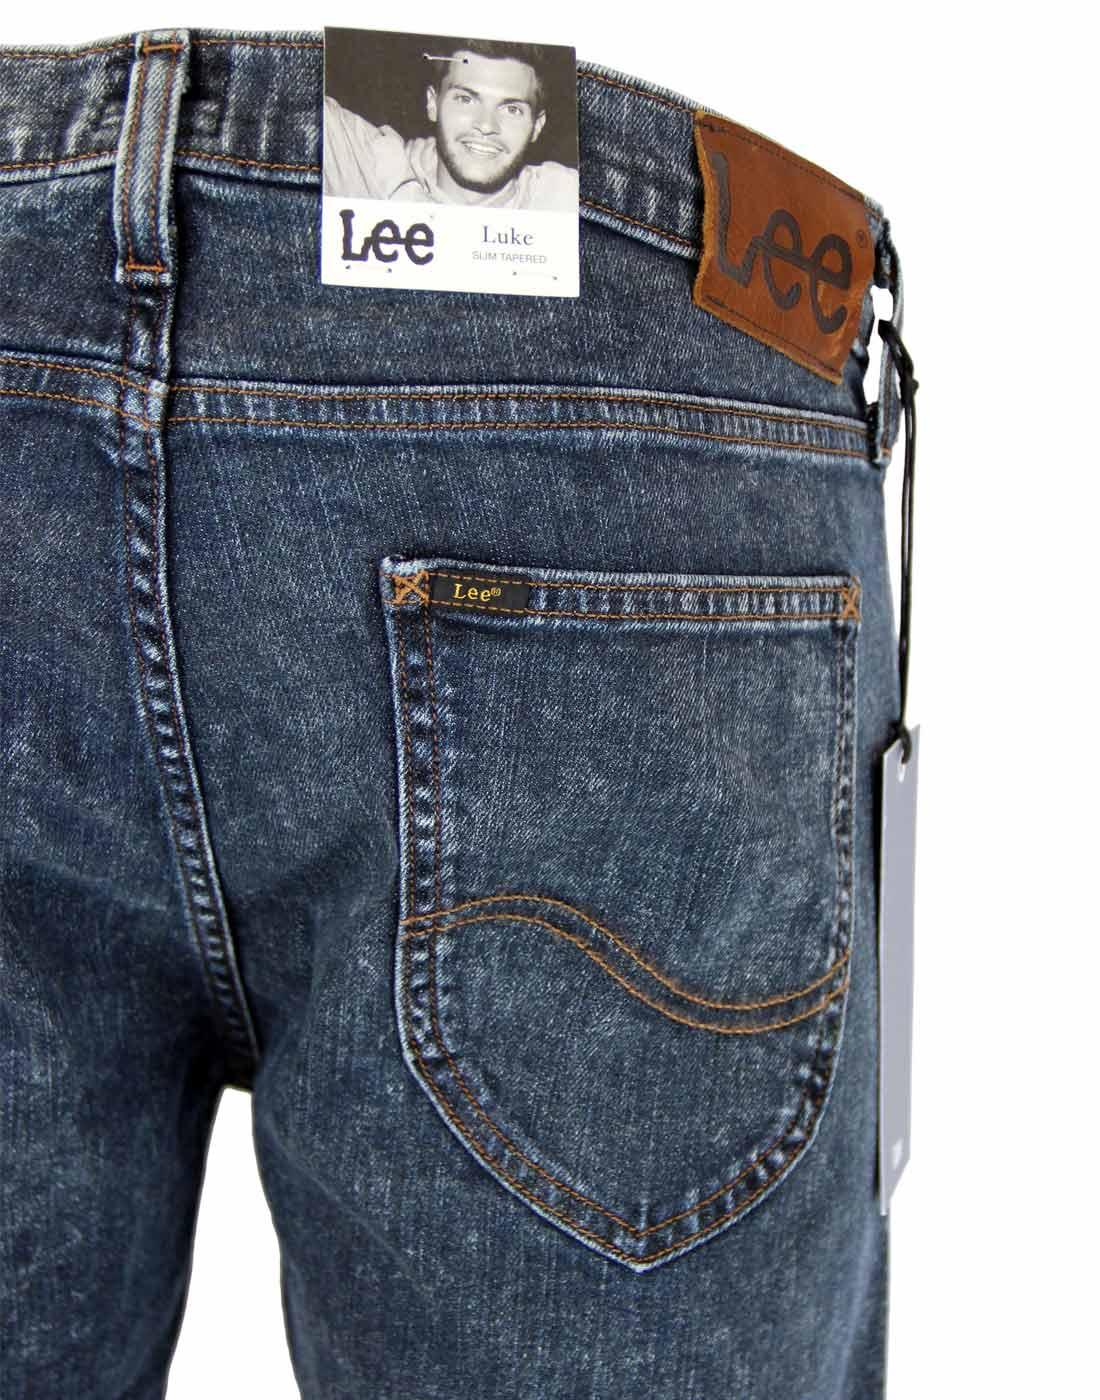 LEE JEANS Luke Retro Indie Mod Slim Tapered Fit Jeans 90s Worn